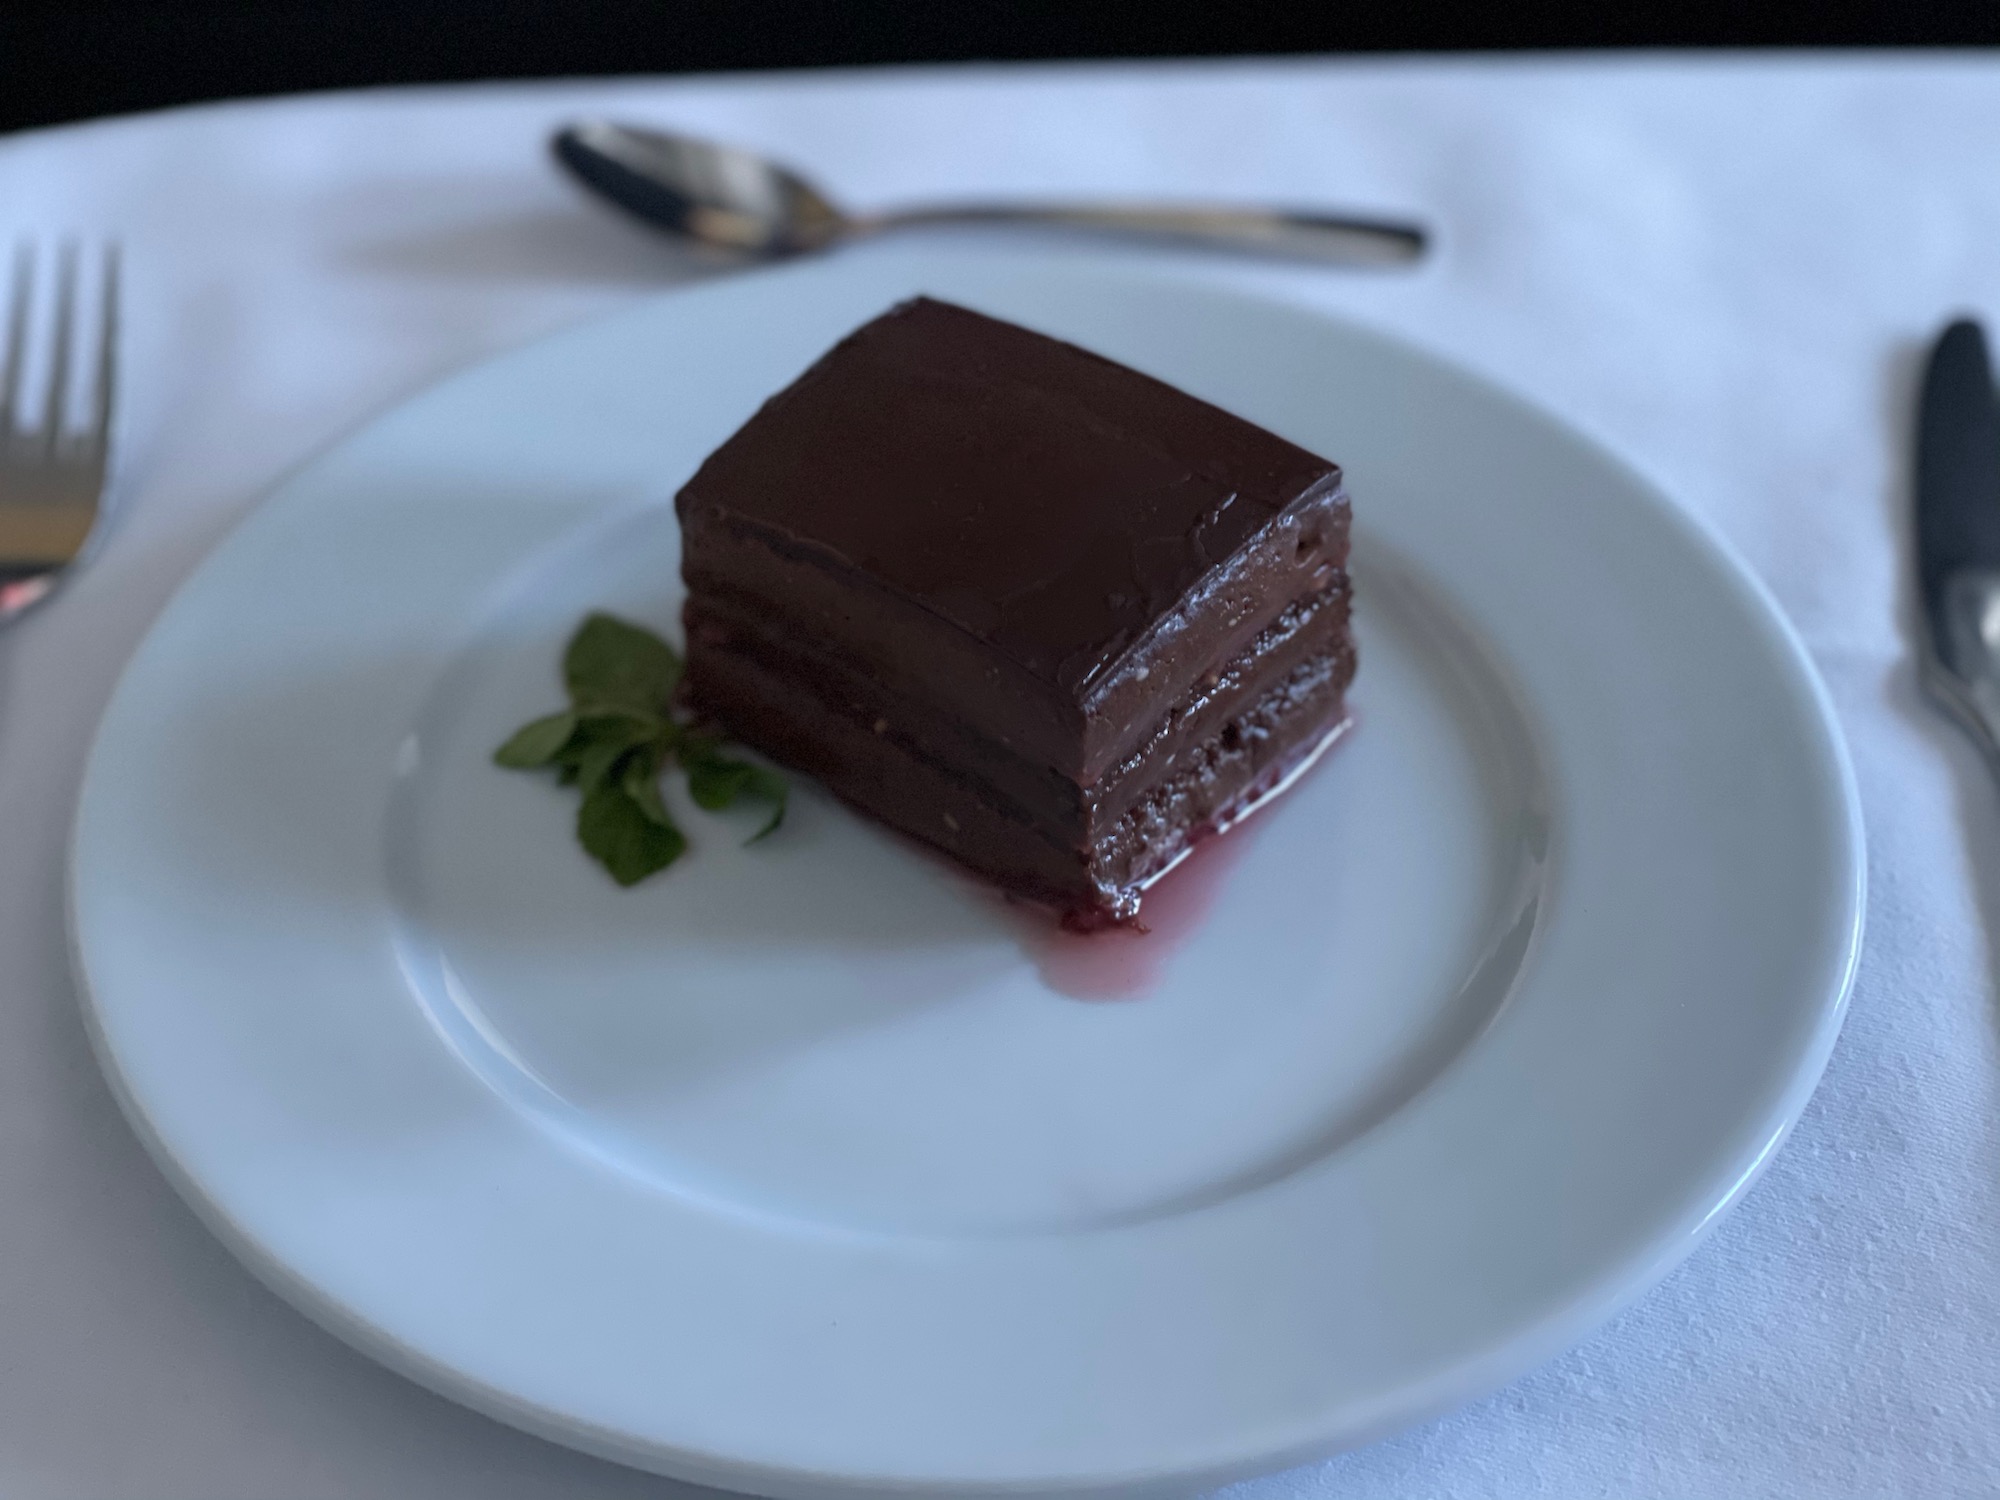 a plate of chocolate cake